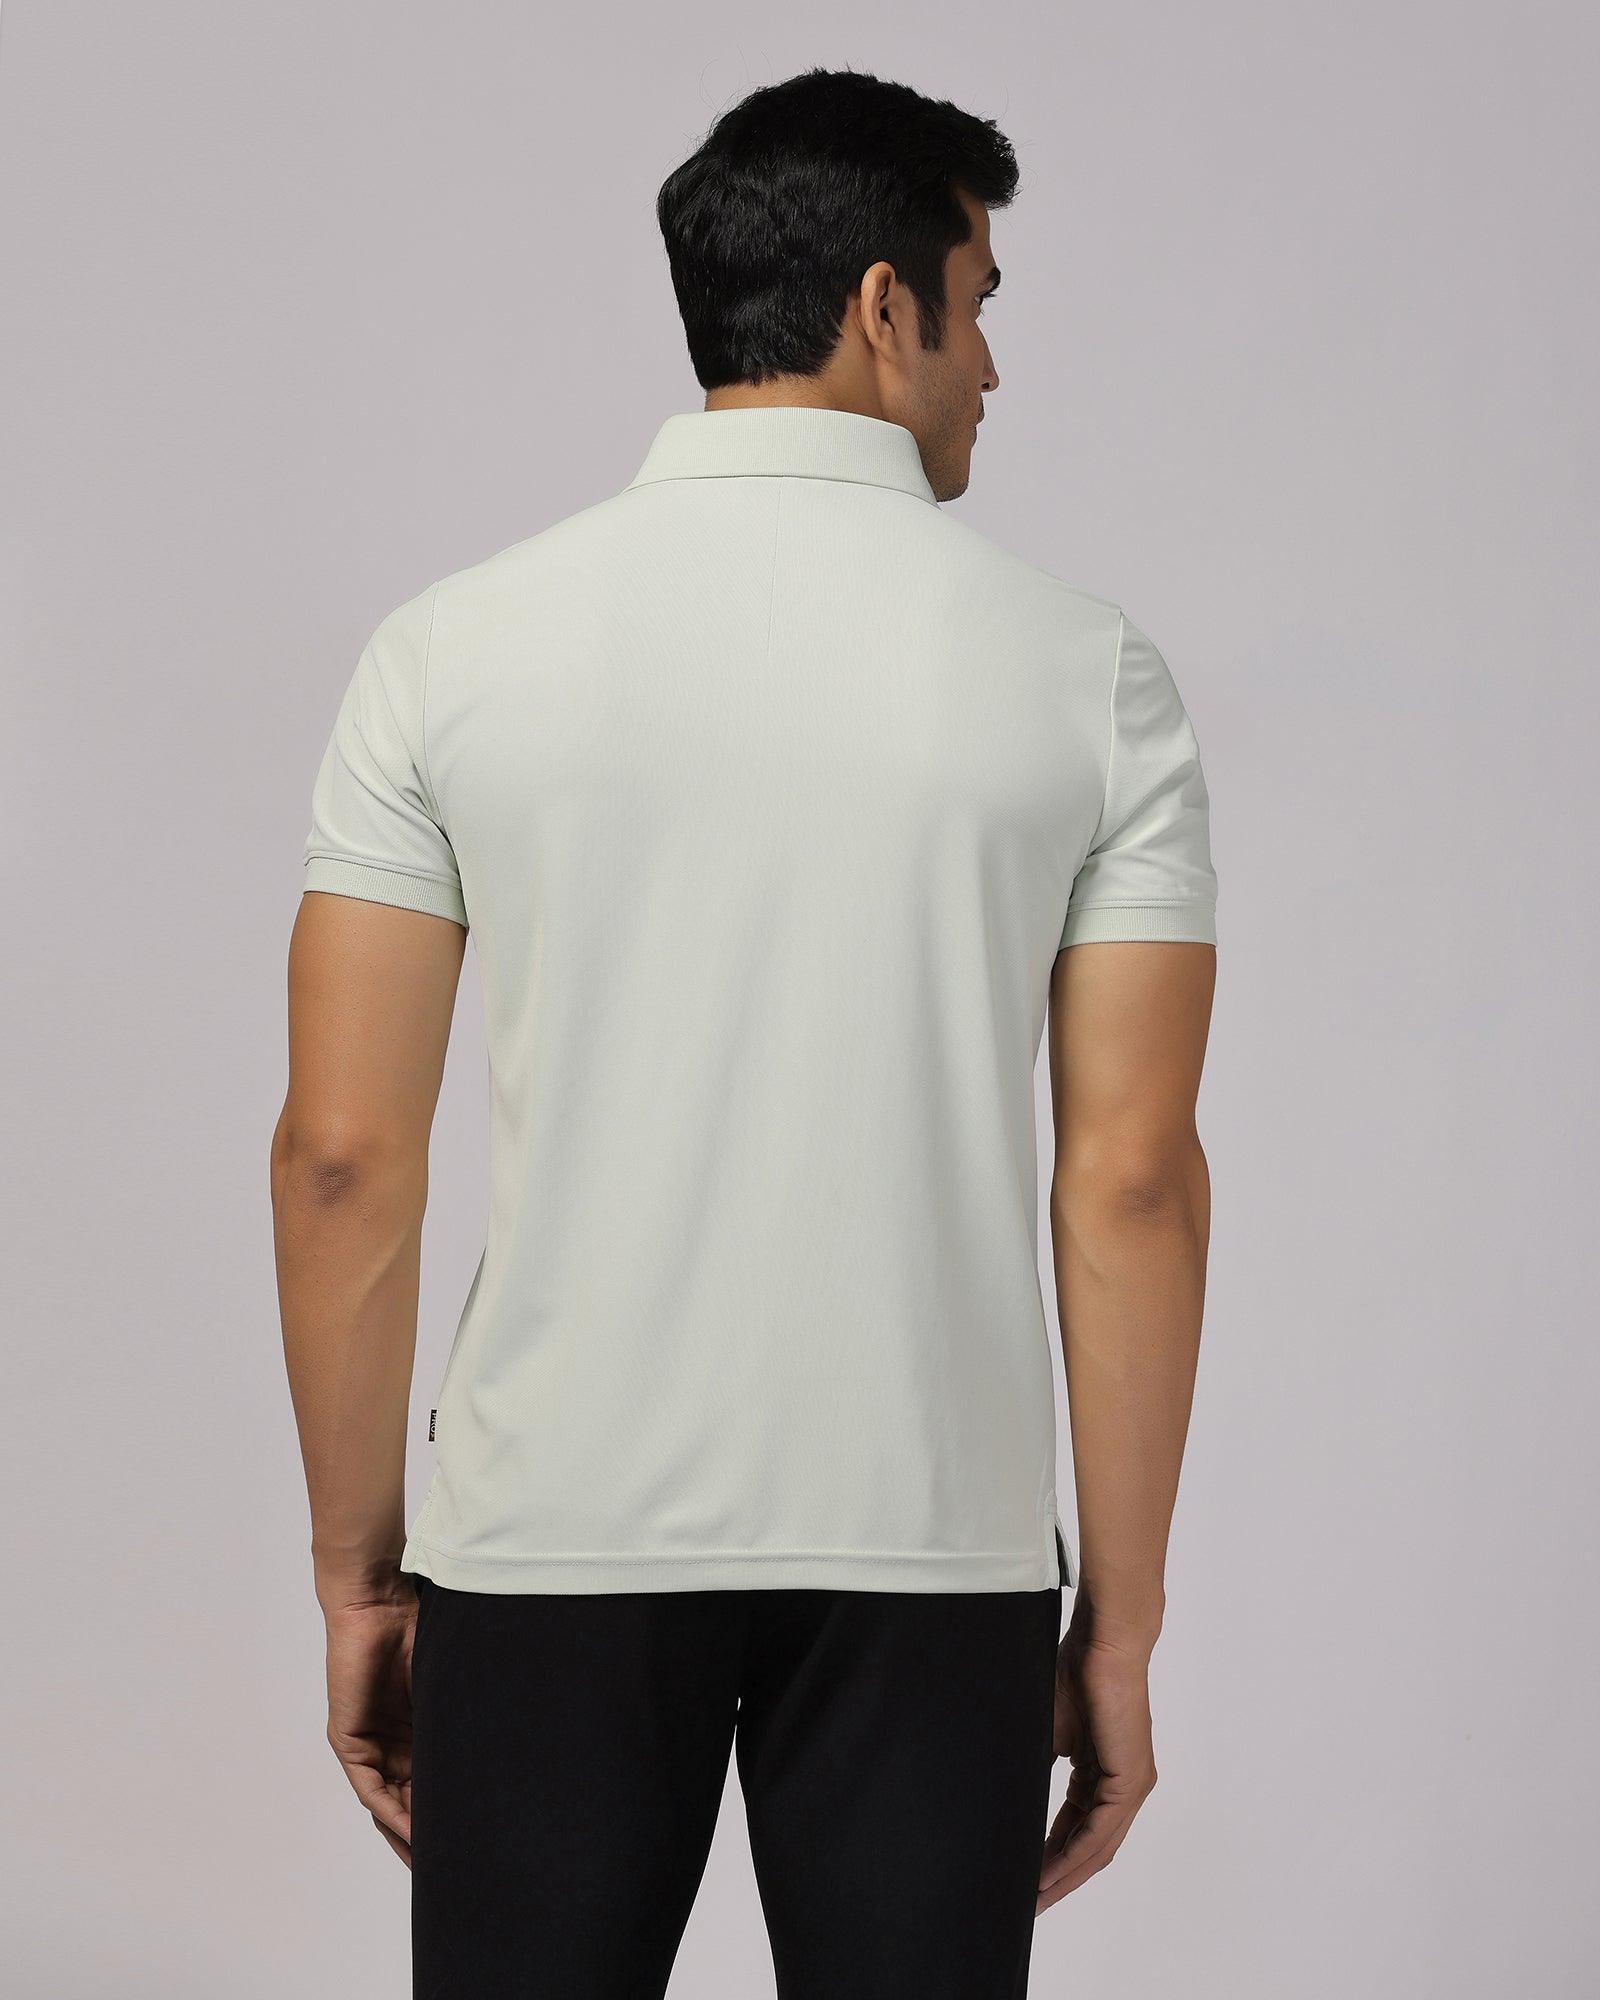 TechPro Polo Mint Solid T-Shirt - Crocs